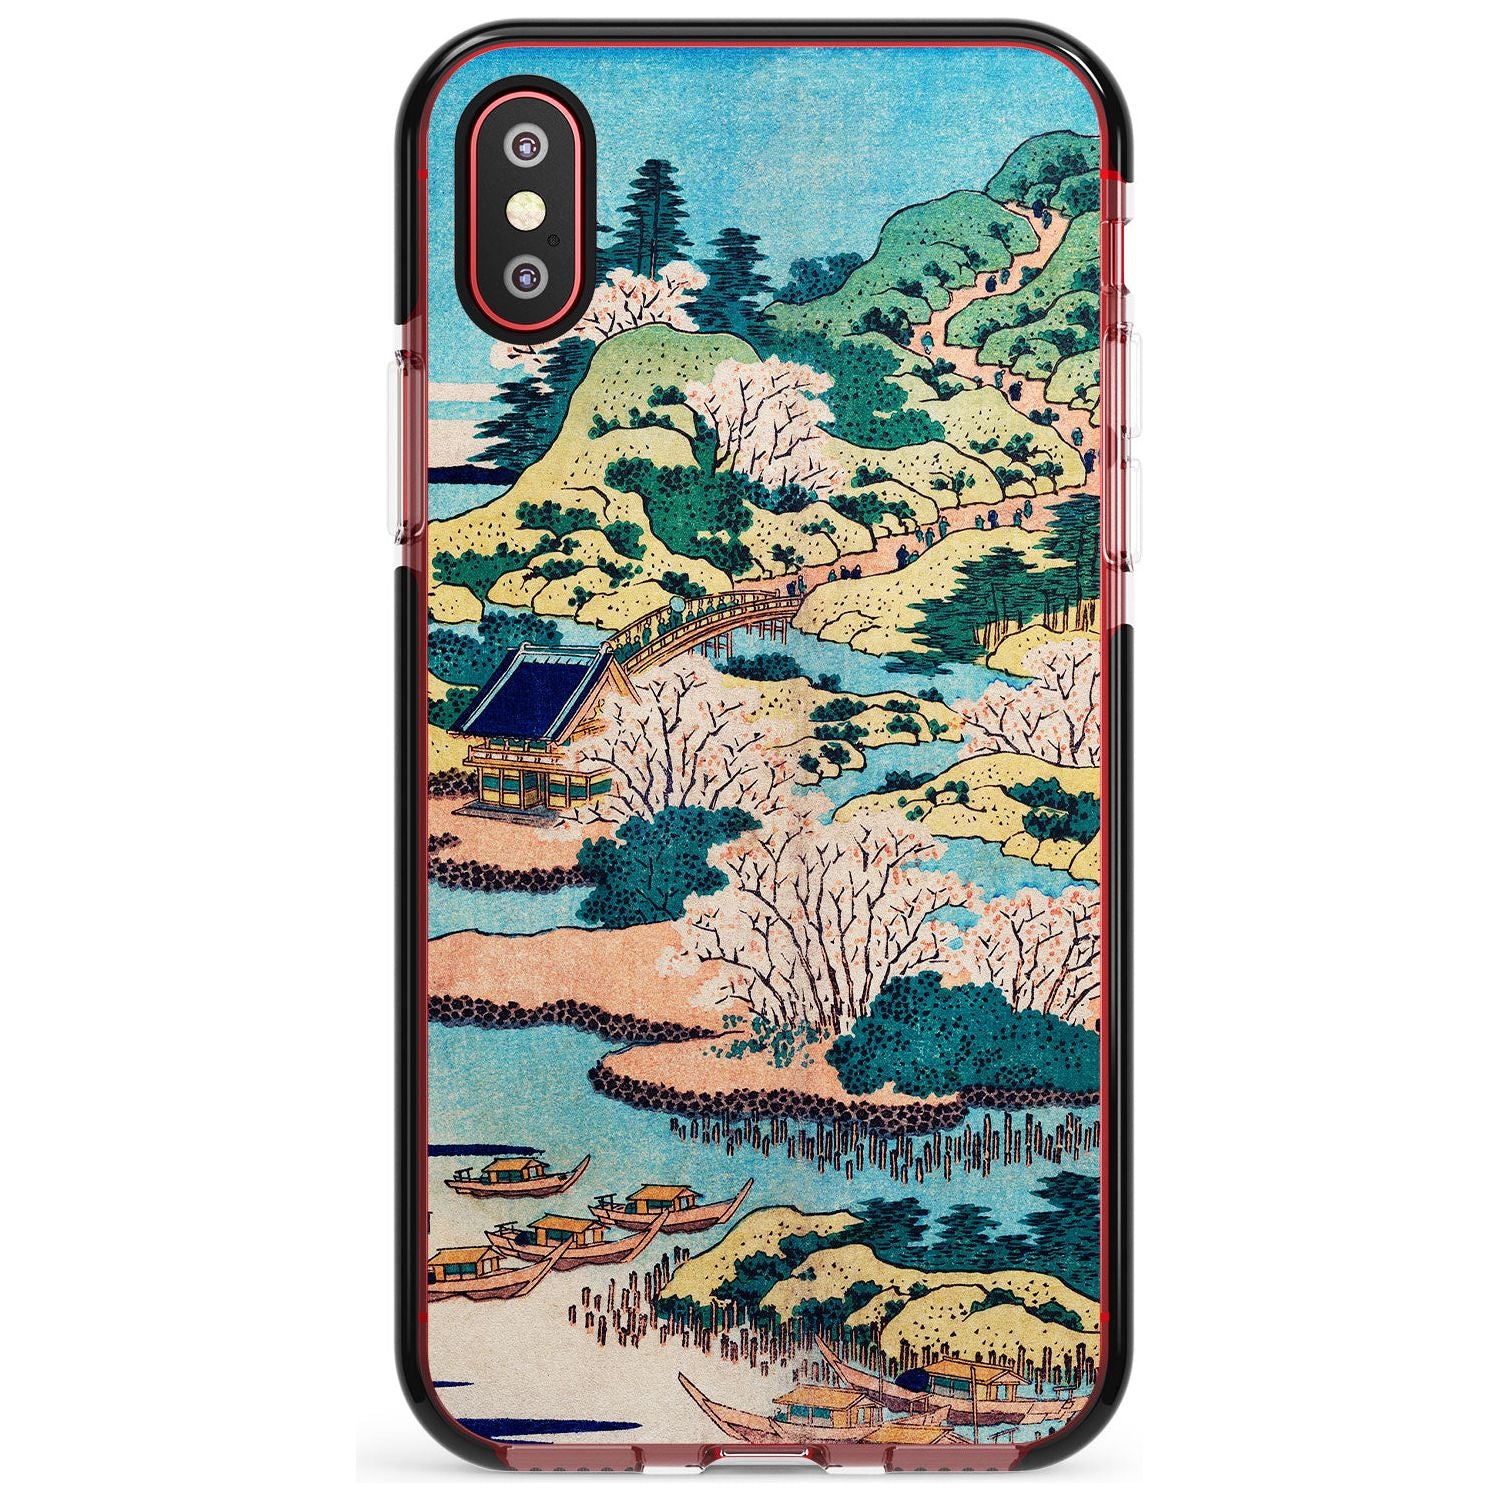 Coastal Community by Katsushika Hokusai  Pink Fade Impact Phone Case for iPhone X XS Max XR